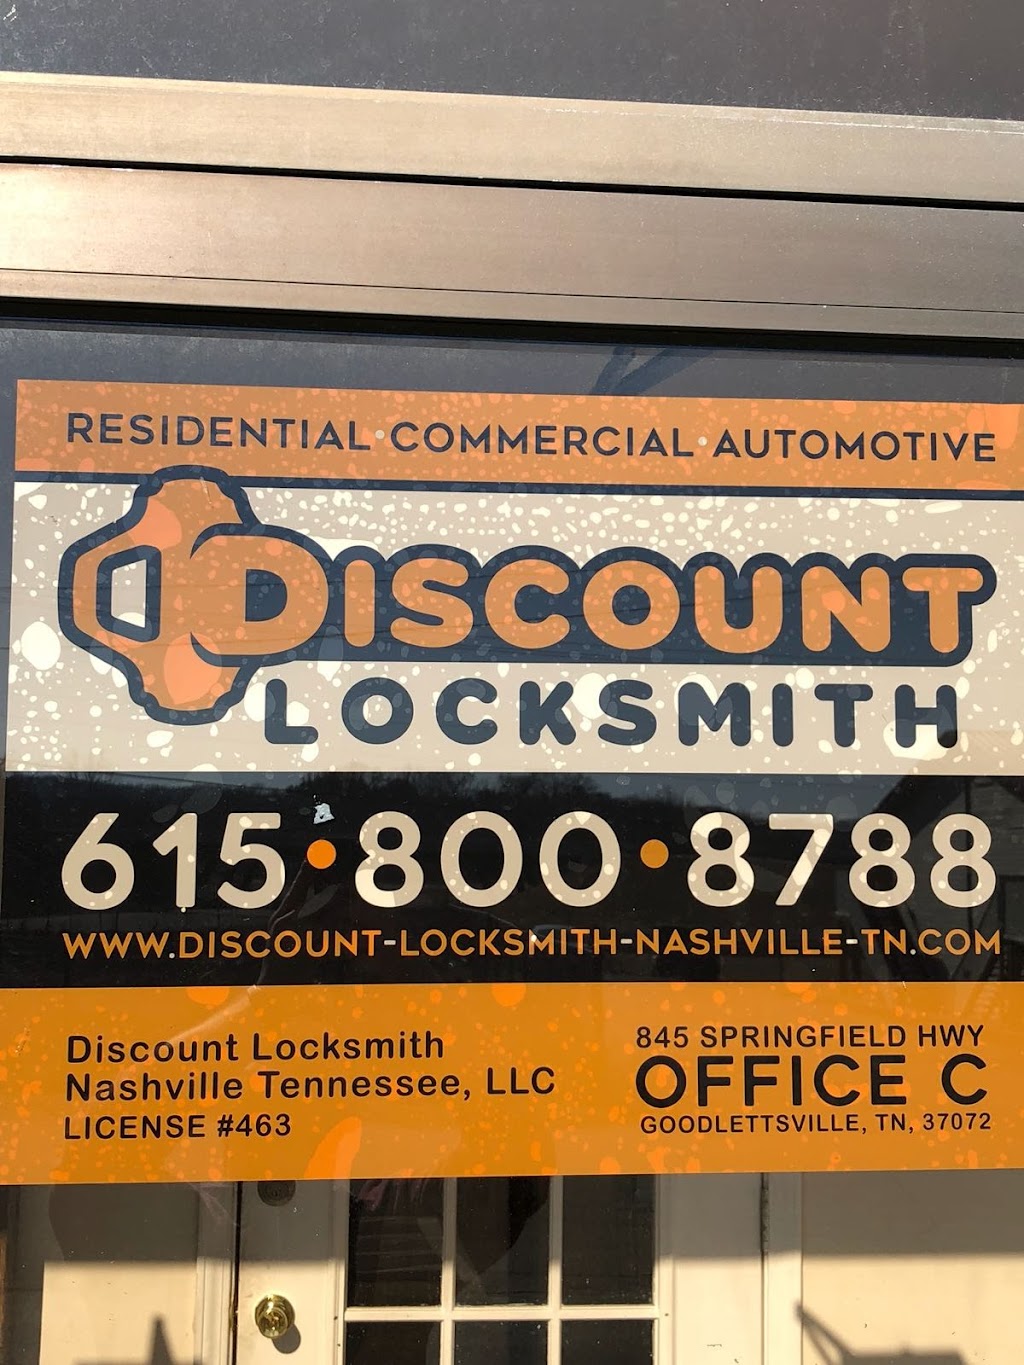 Discount Locksmith of Nashville | 845 Springfield Hwy office c, Goodlettsville, TN 37072 | Phone: (615) 800-8788